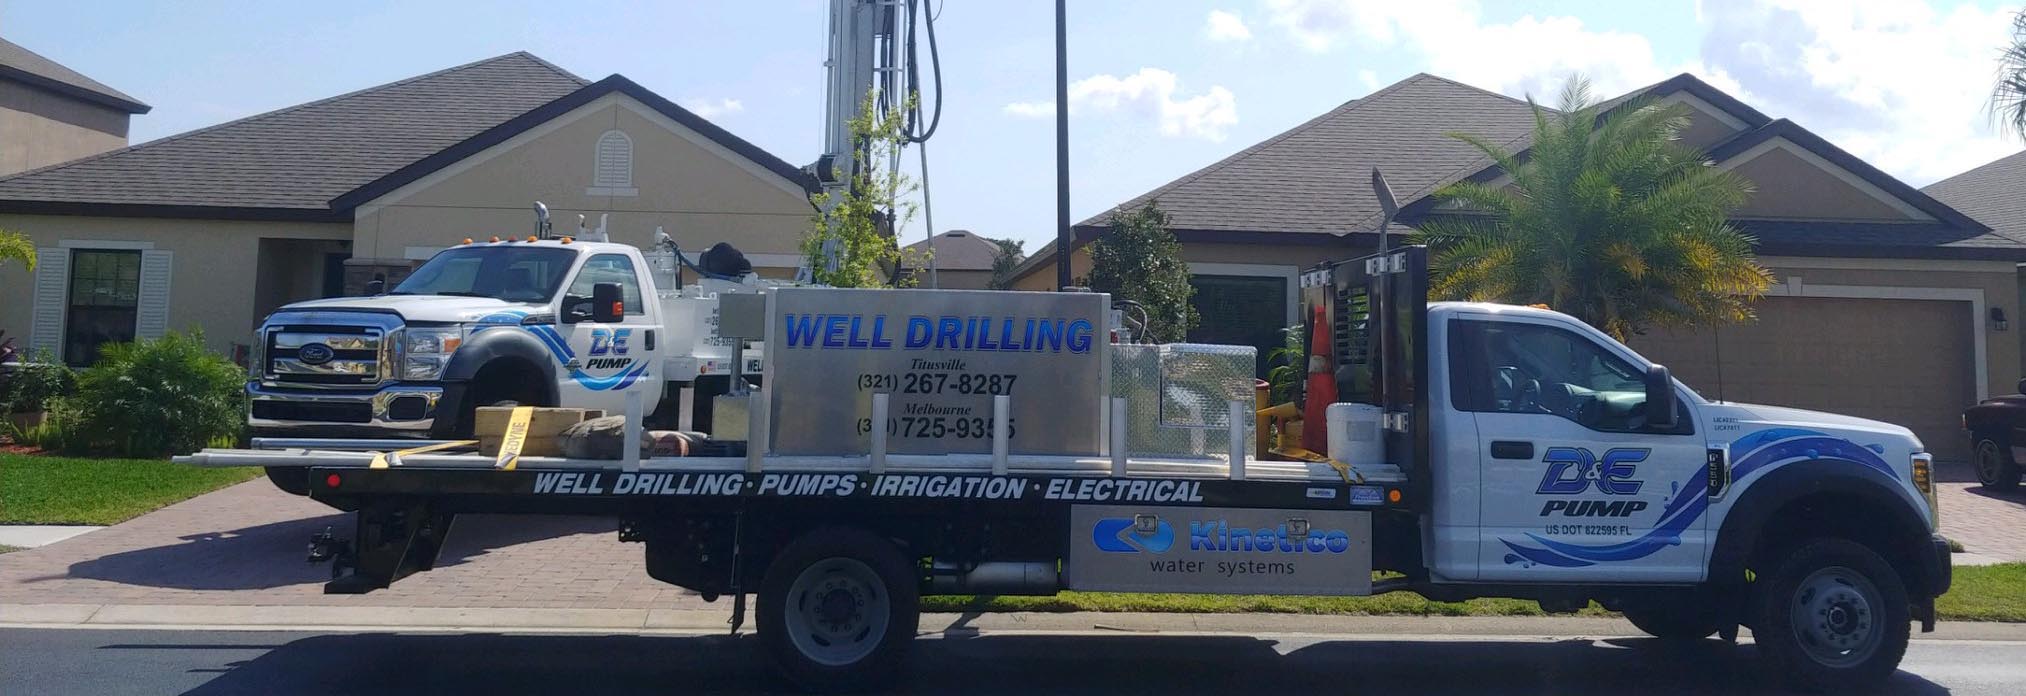 well drilling trucks  | D&E Pump